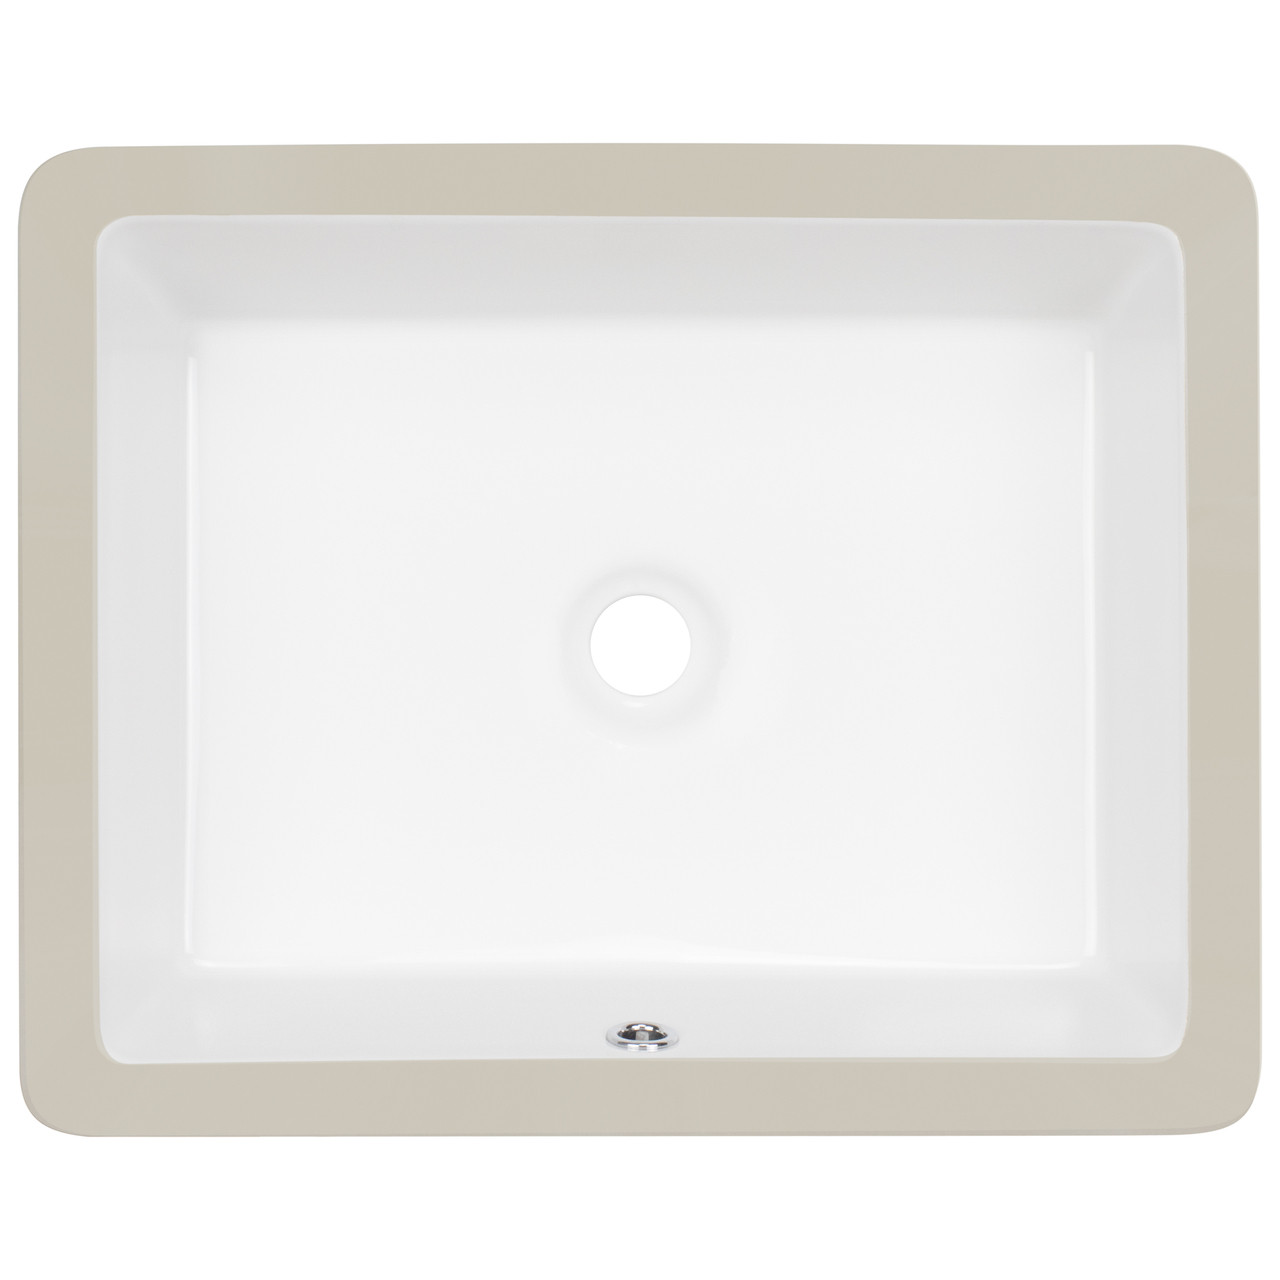 19 75 Ticor B4 Belfast Series Ceramic Undermount Rectangular Vanity Sink